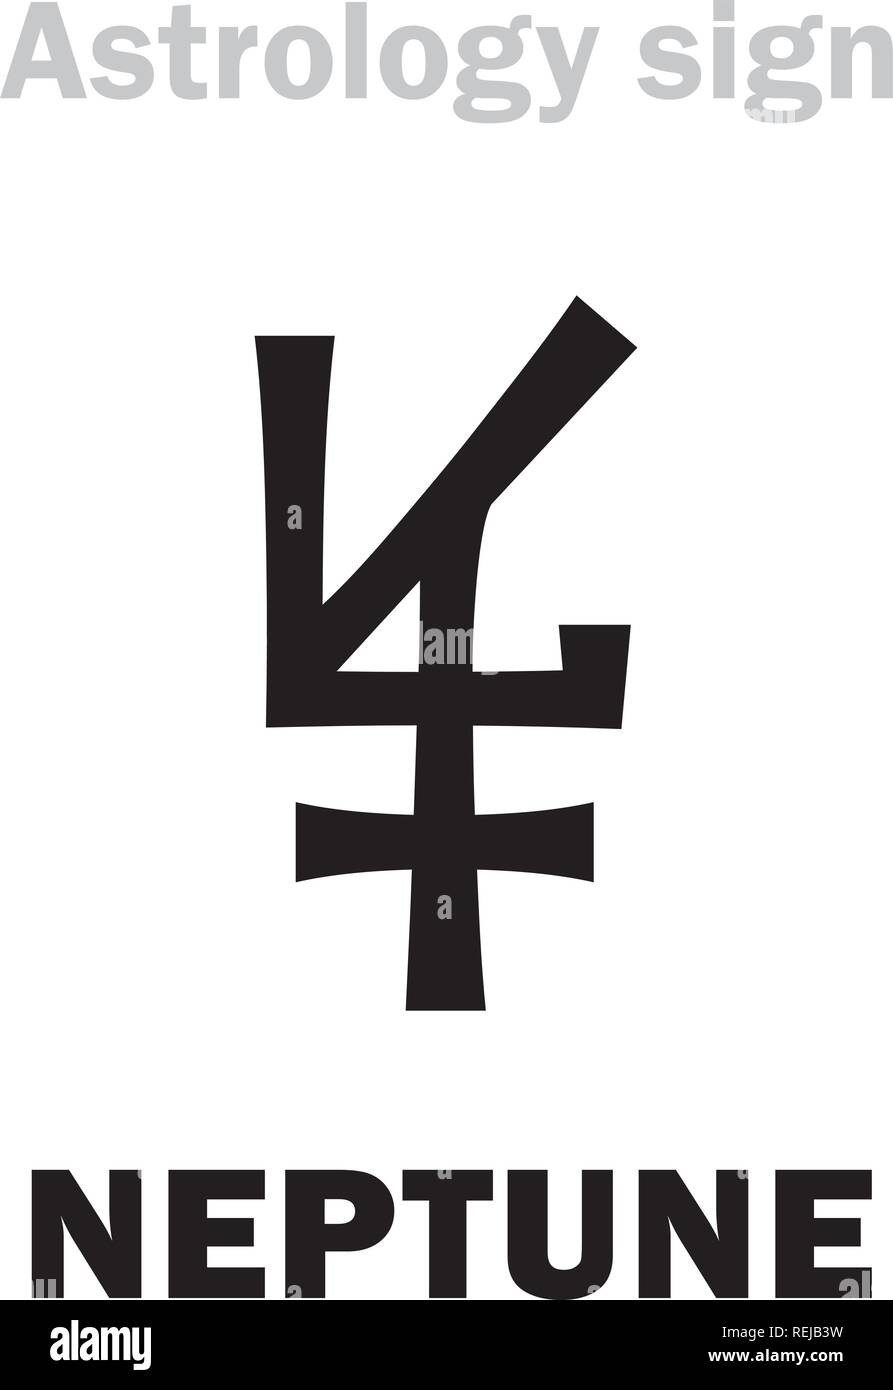 Astrology Alphabet: NEPTUNE, higher global planet. Hieroglyphics character sign (LV-monogram symbol in honor of his discoverer LeVerrier). Stock Vector